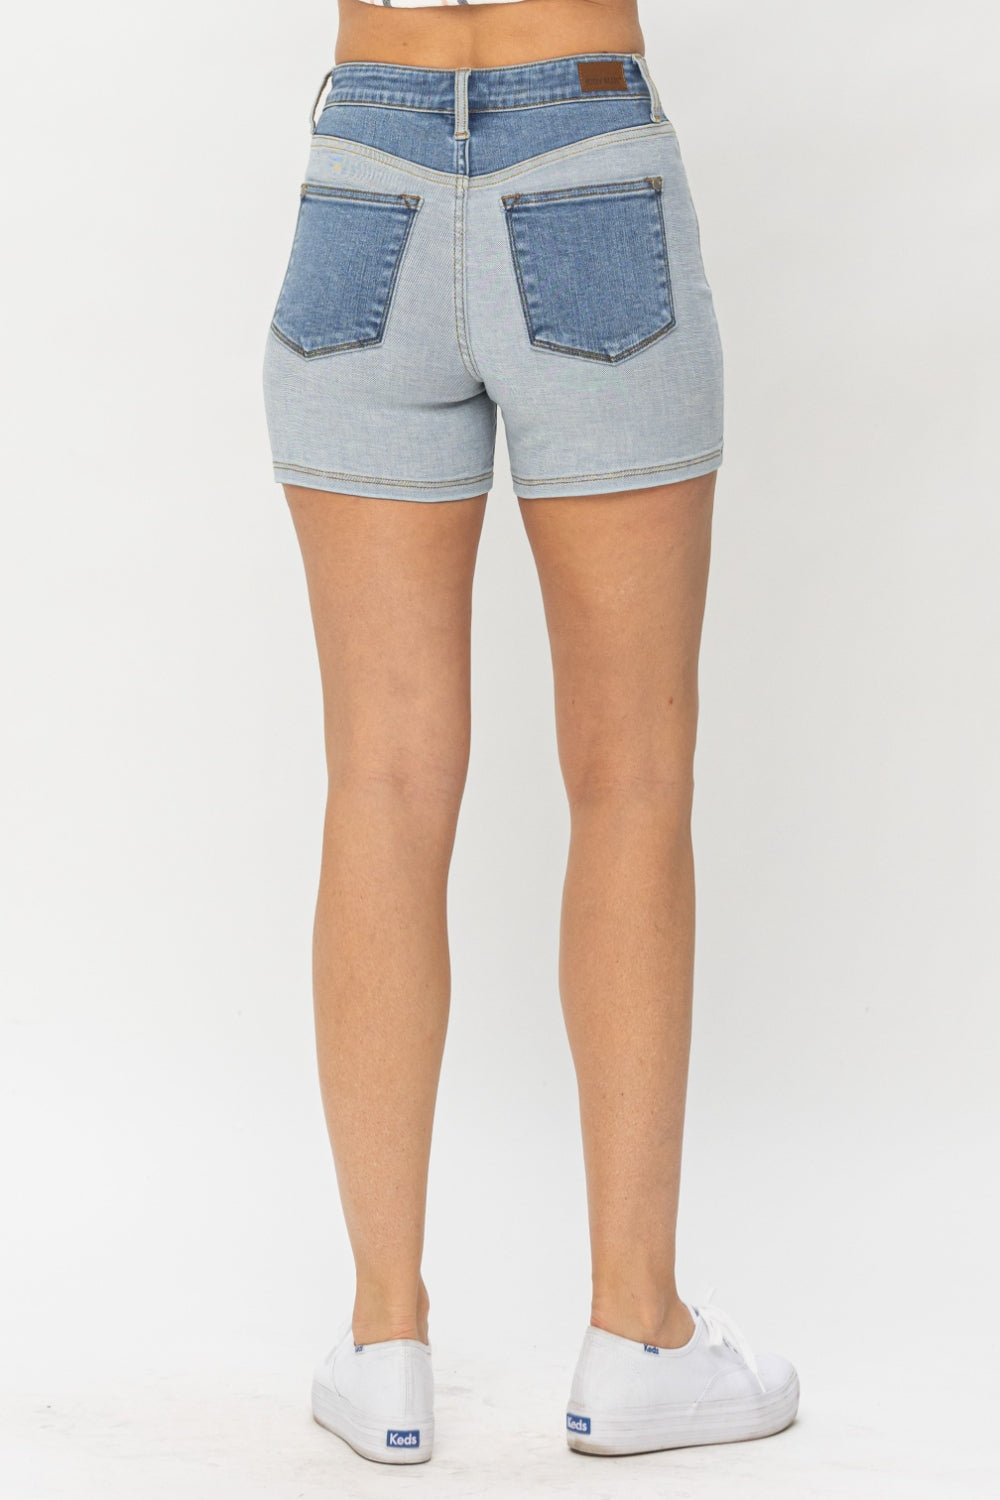 Judy Blue Full Size Color Block Denim ShortsJudy Blue Full Size Color Block Denim Shorts - Trendy & Casual Summer Wear